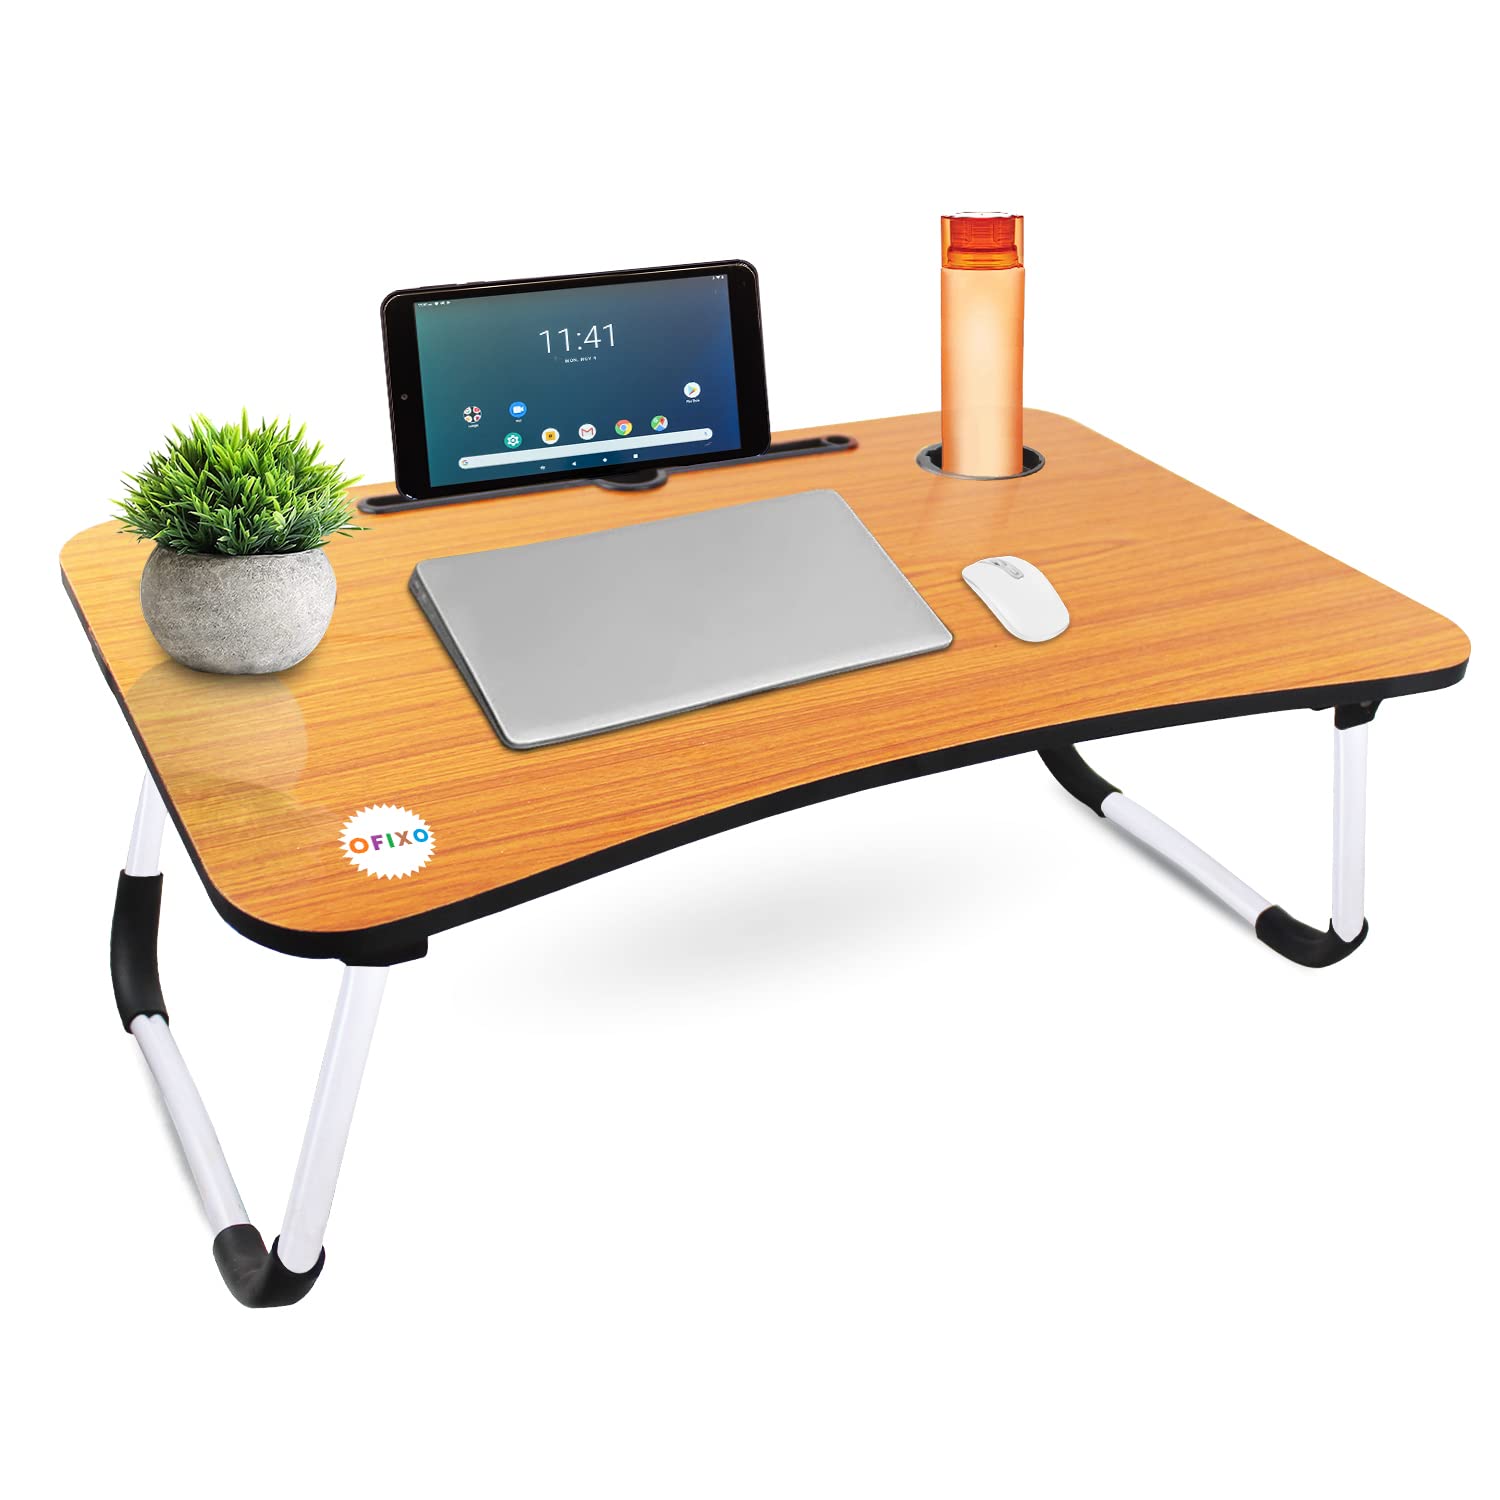 خرید میز لپ تاپ، قیمت میز لپ تاپ